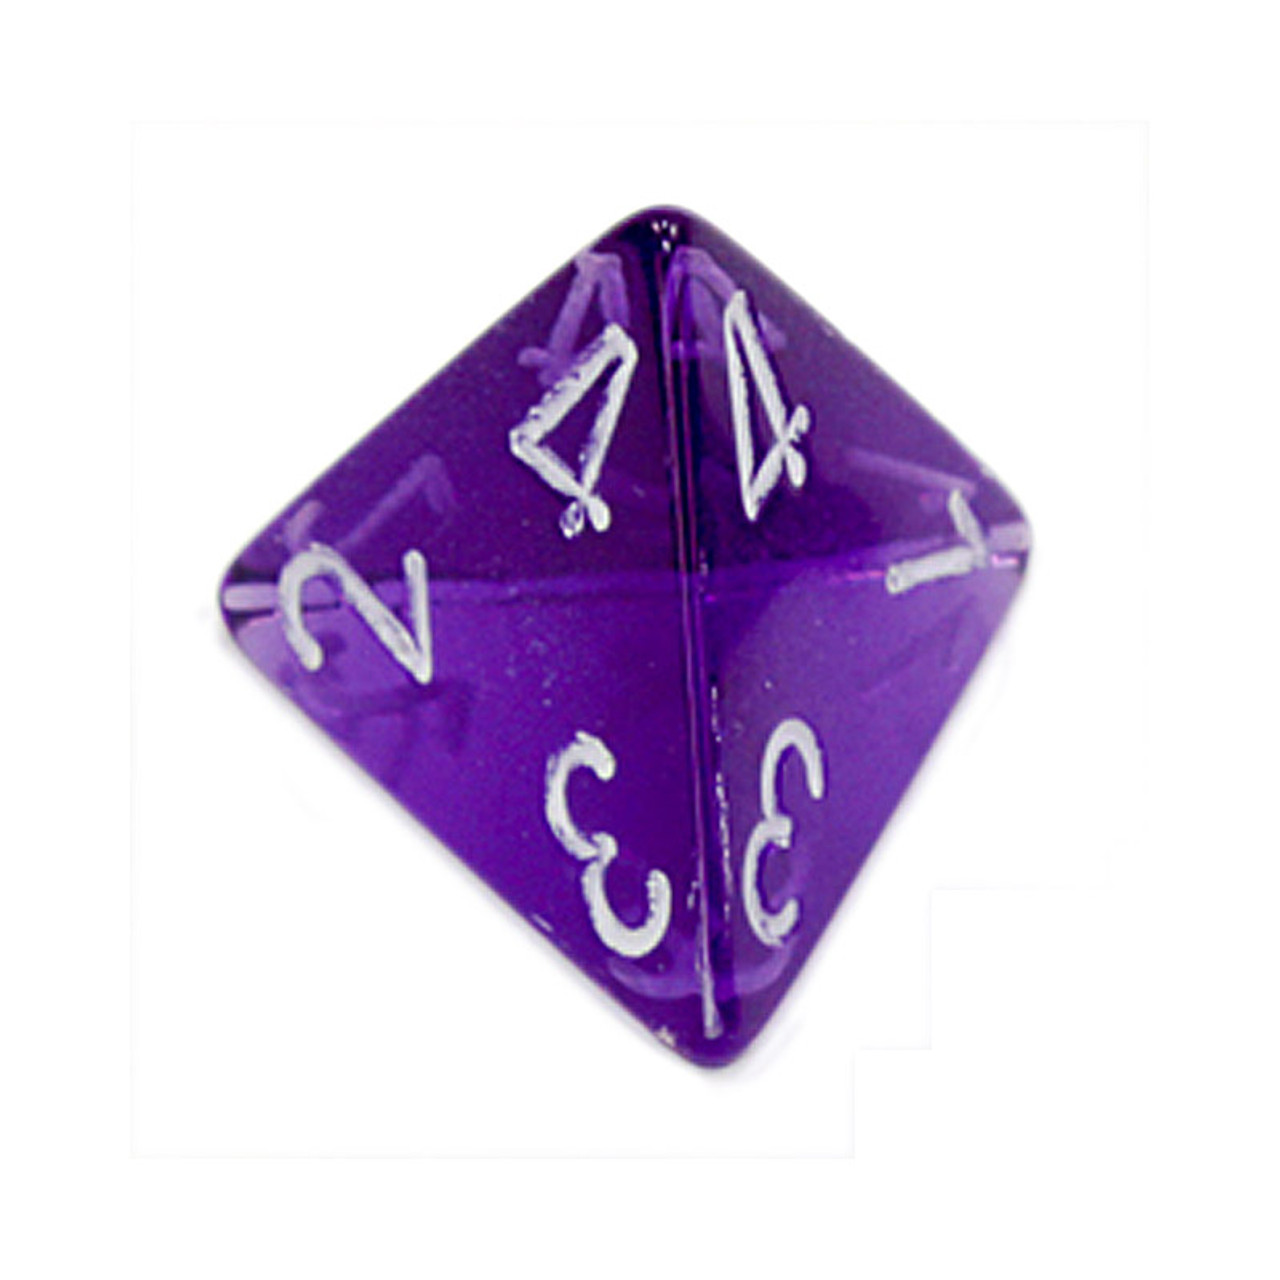 4-Sided Translucent Dice (d4) - Purple